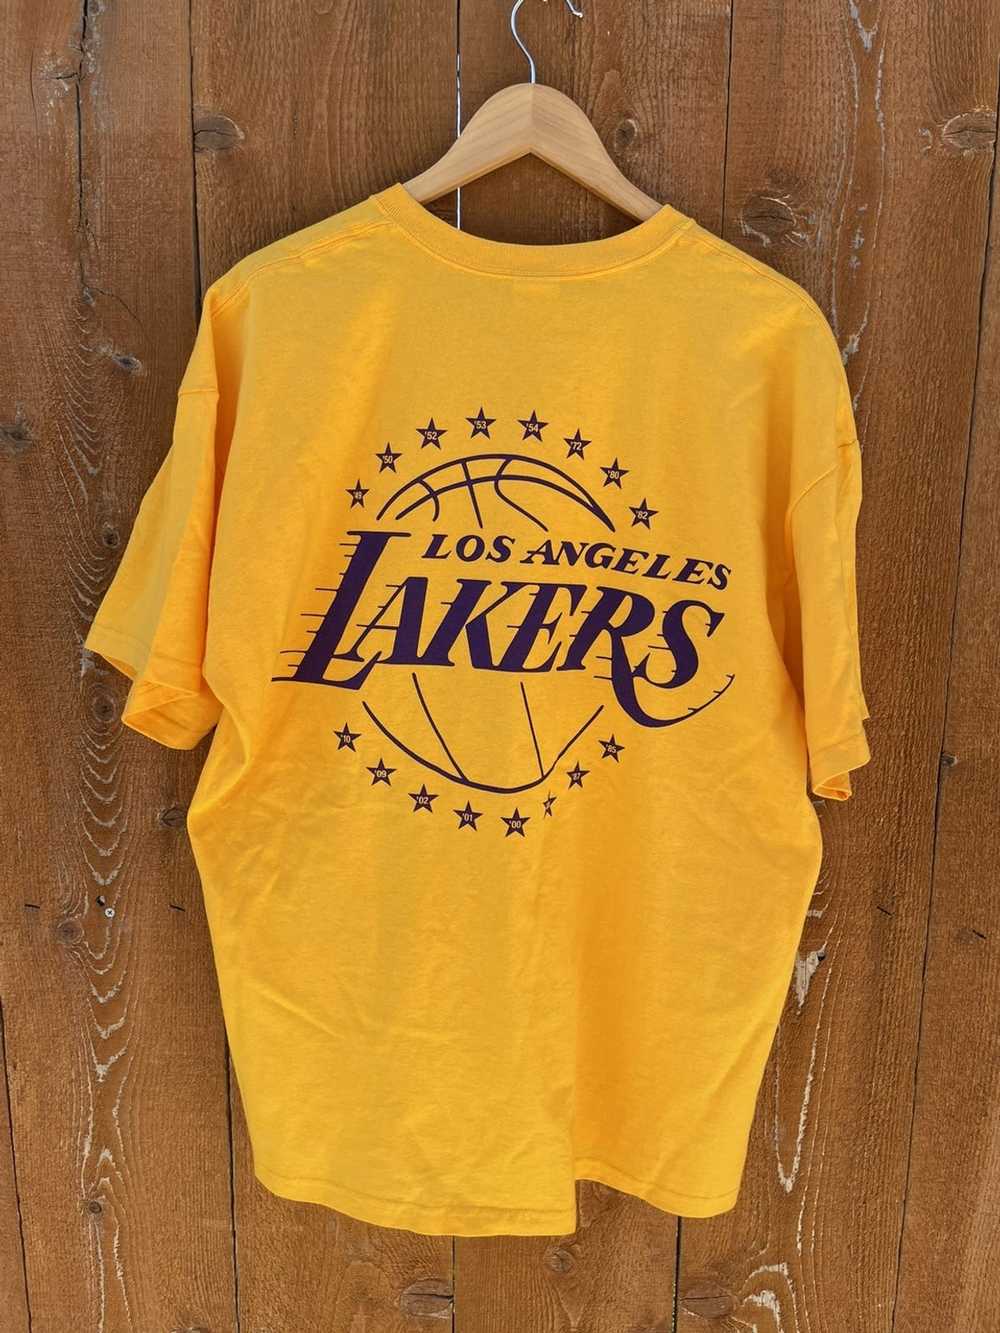 L.A. Lakers × Lakers × Vintage Vintage lakers - image 2